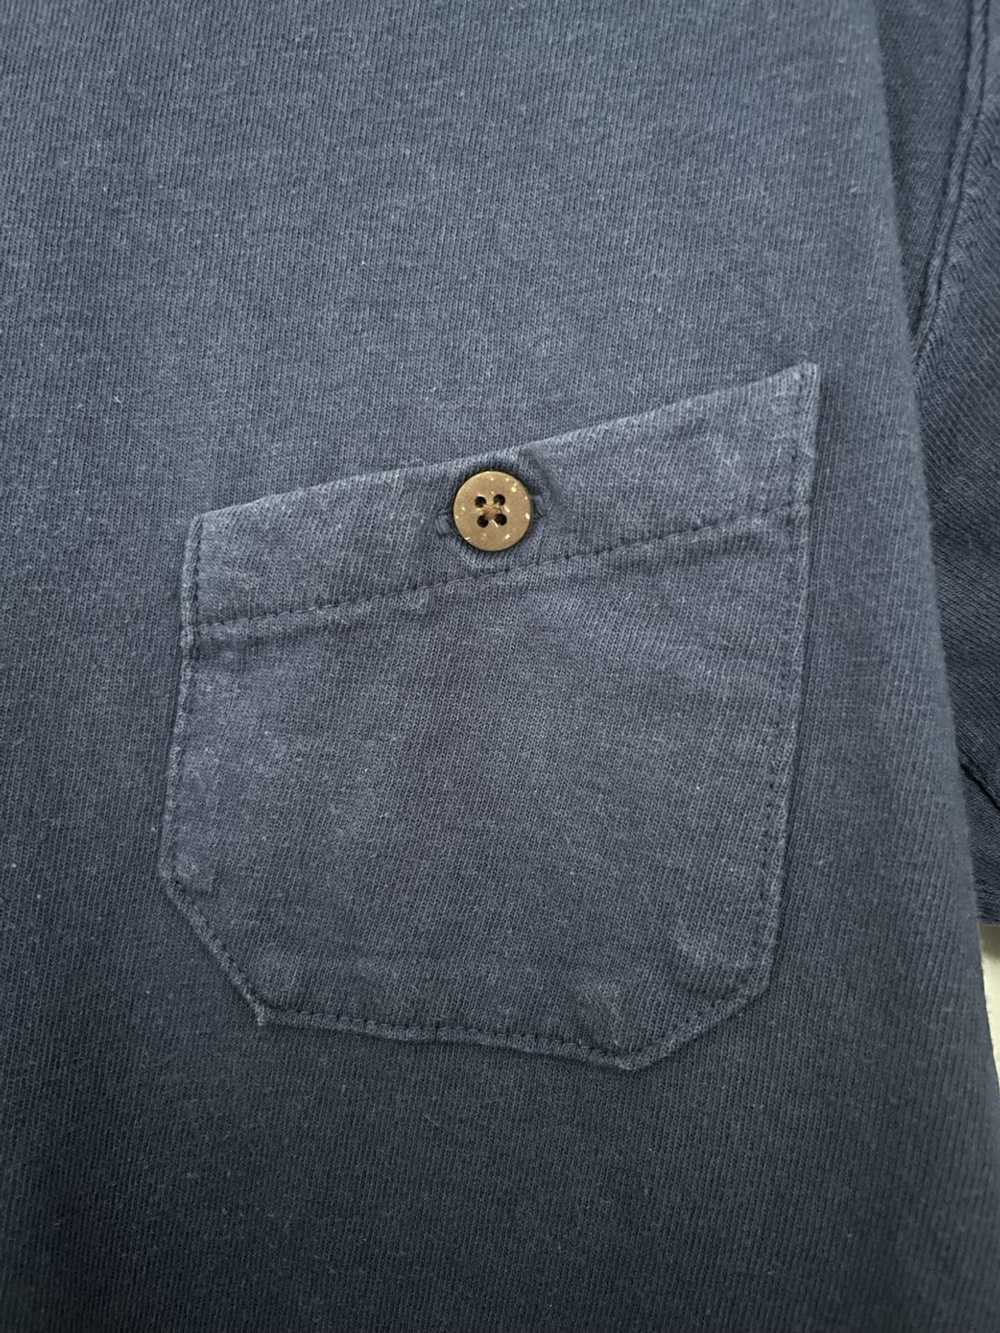 Nigel Cabourn Japan Mainline Basic T-Shirt - image 4